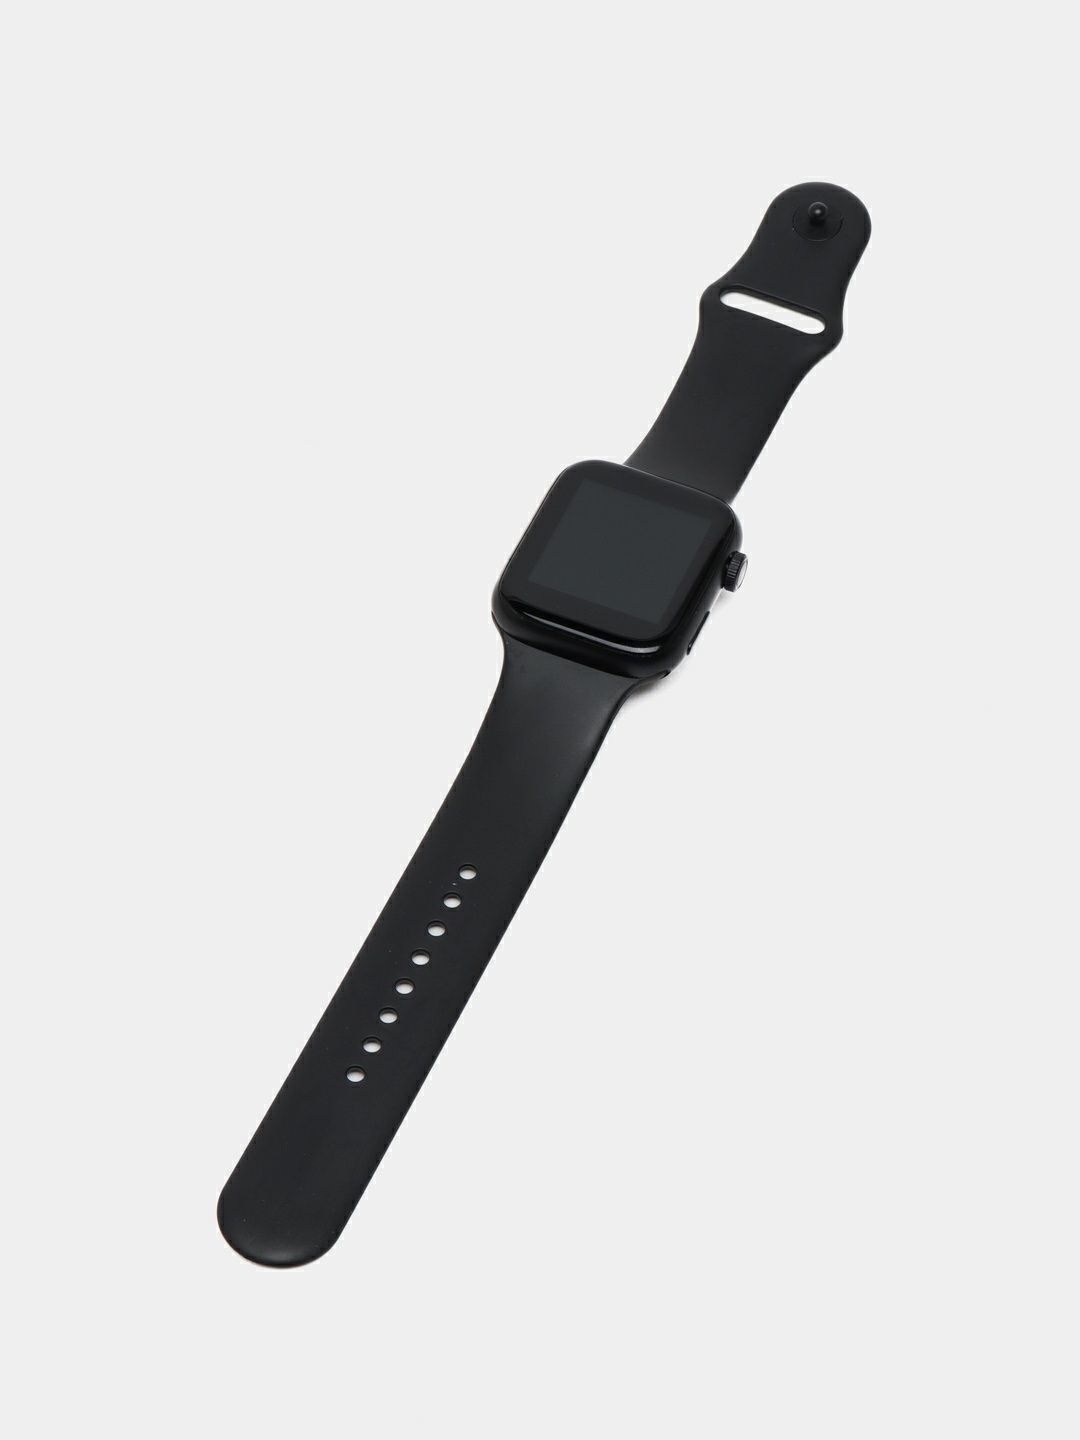 X8 Ultra Combo,Хит товар по низкой цене, Apple watch,С сим картой,Купи